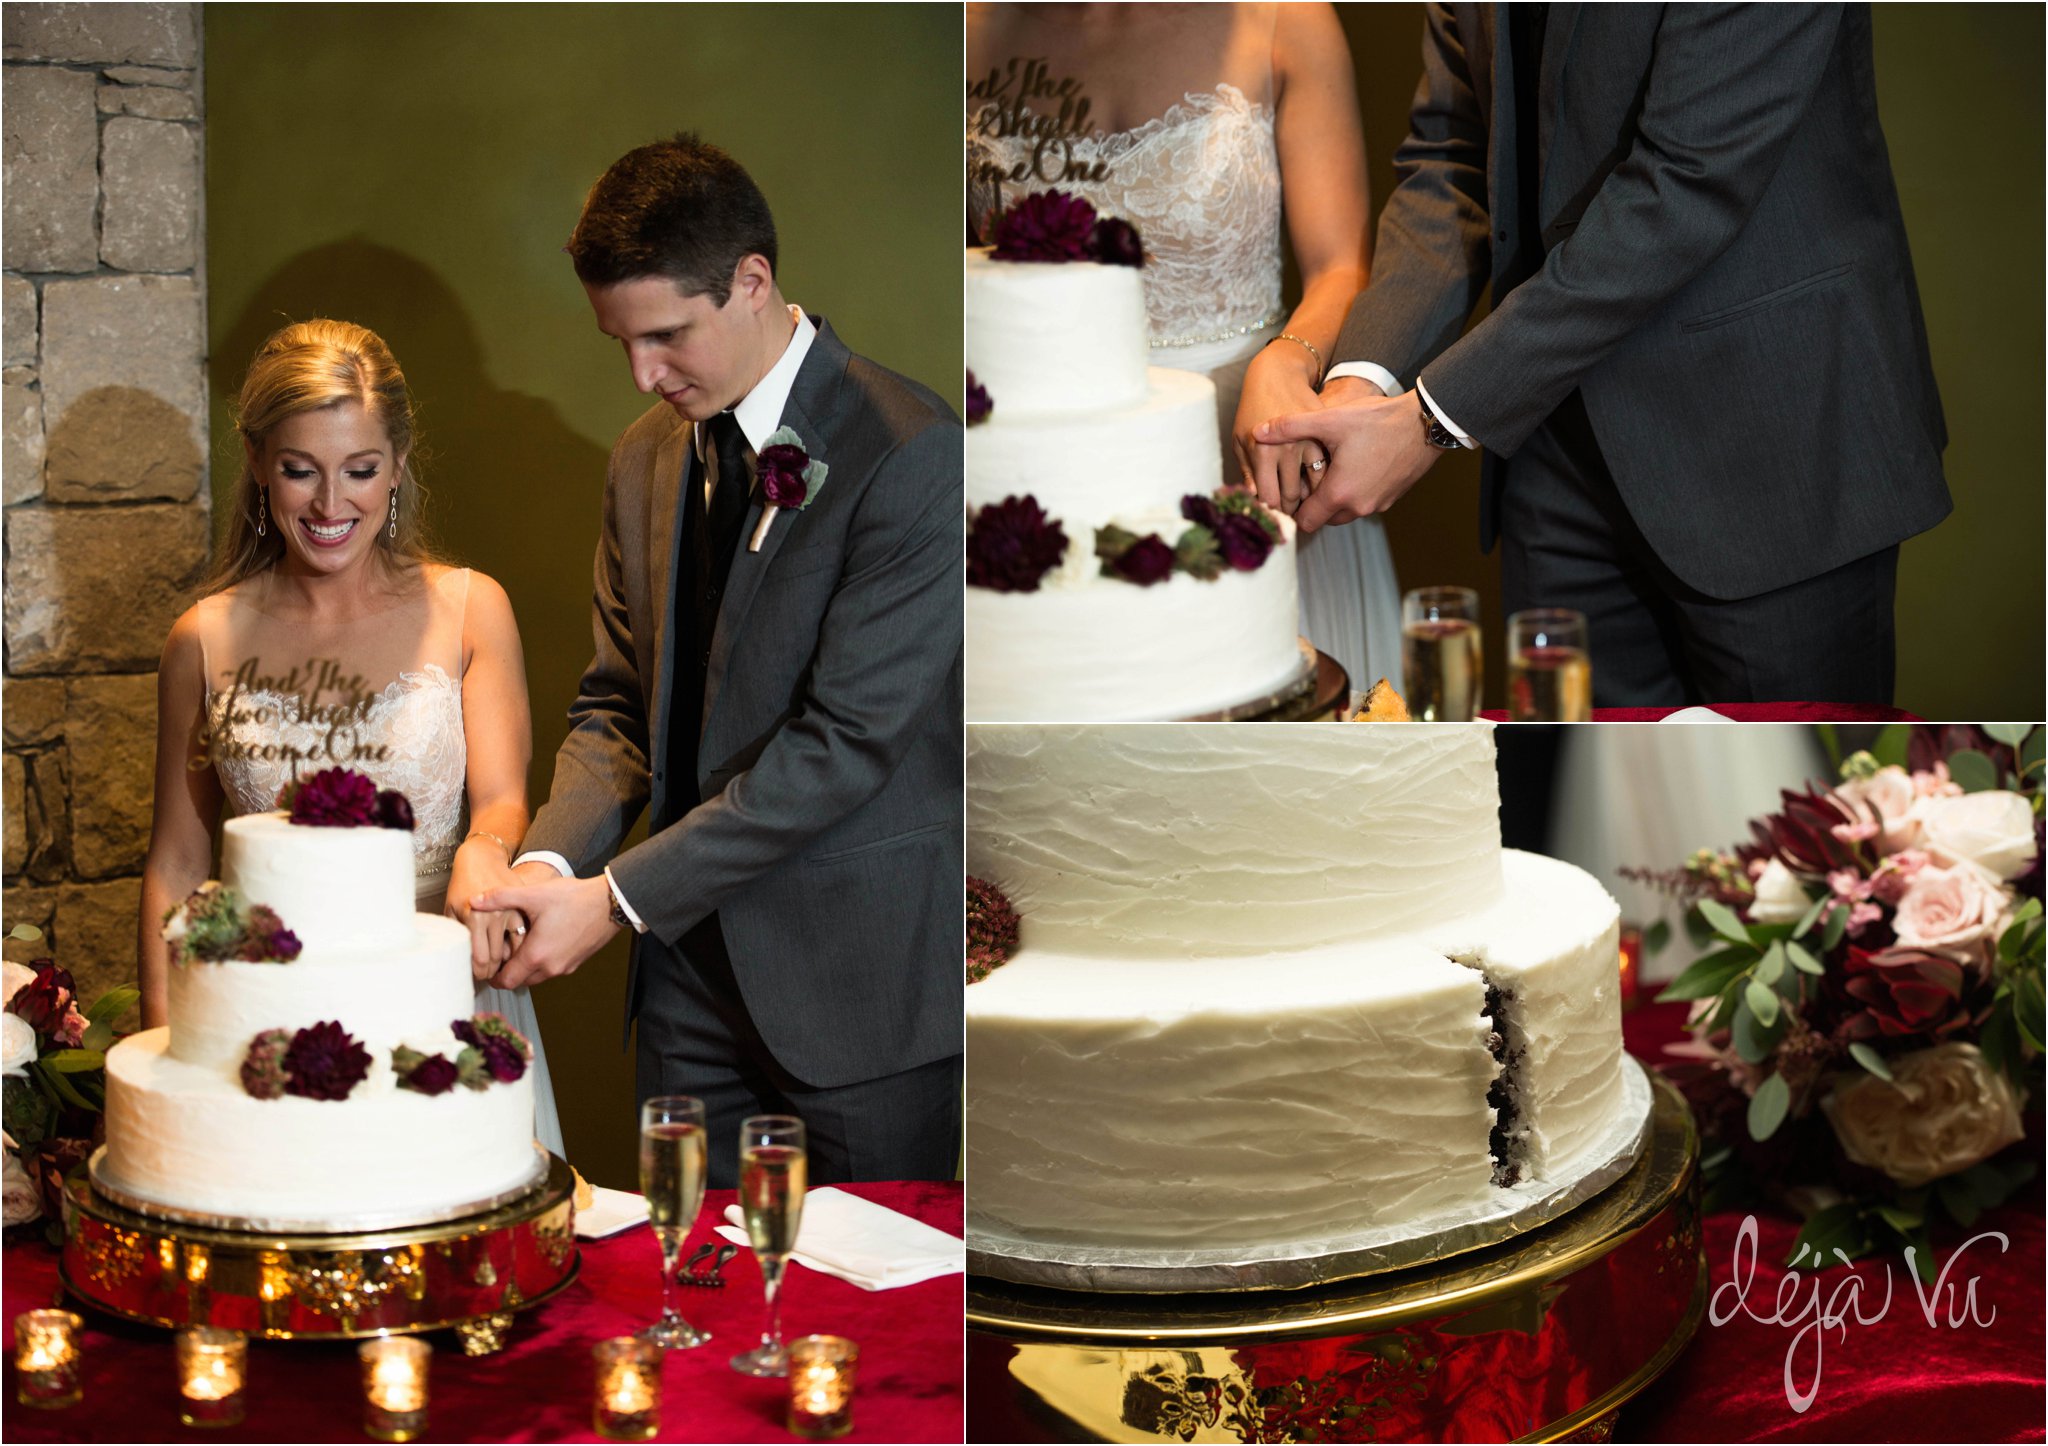 Shadow Glen Country Club Wedding | textured cake with dahlias | Images by: www.feliciathephotographer.com